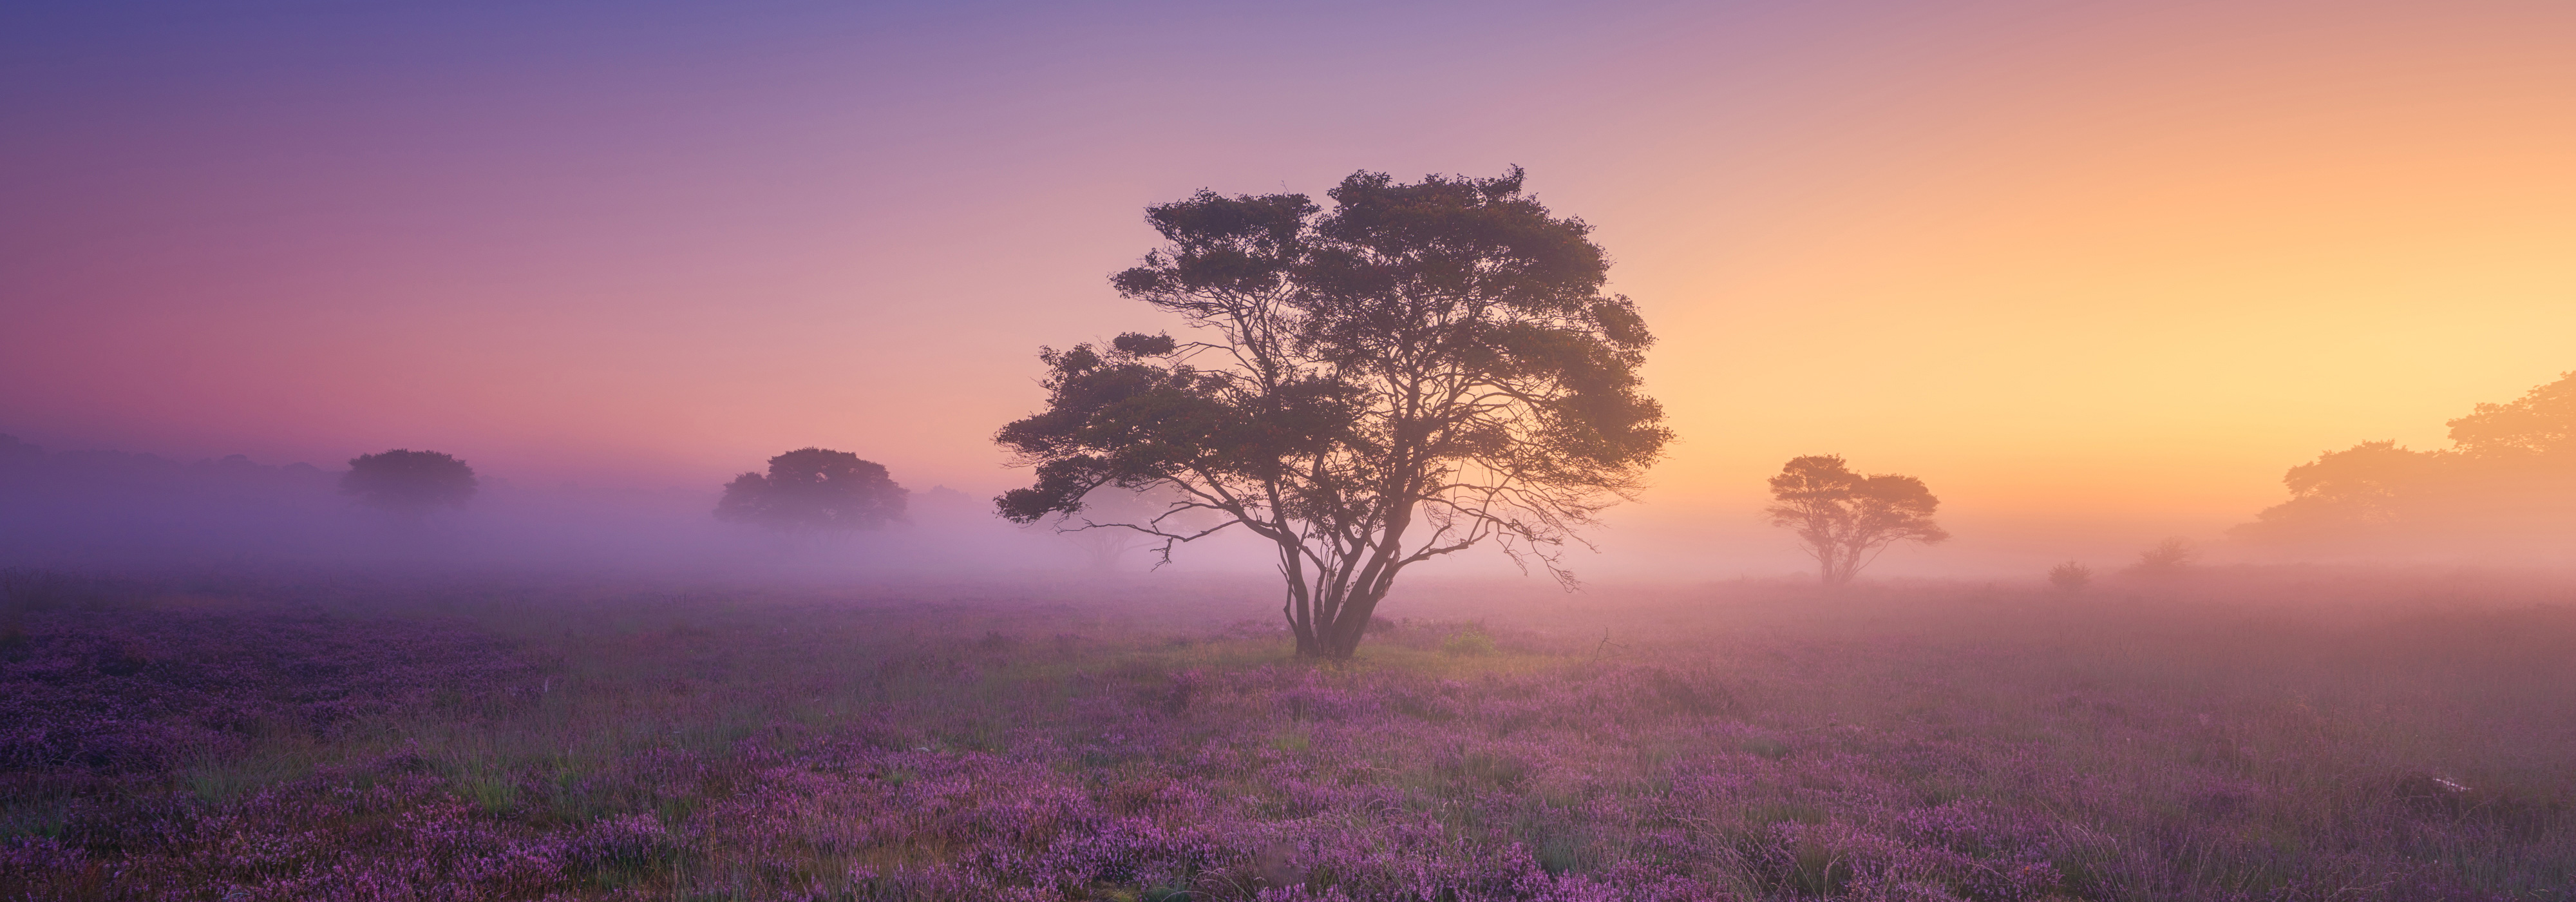 albert-dros-sony-alpha-7RII-a-solitary-tree-at-dawn-bathed-in-rich-purple-light.jpeg